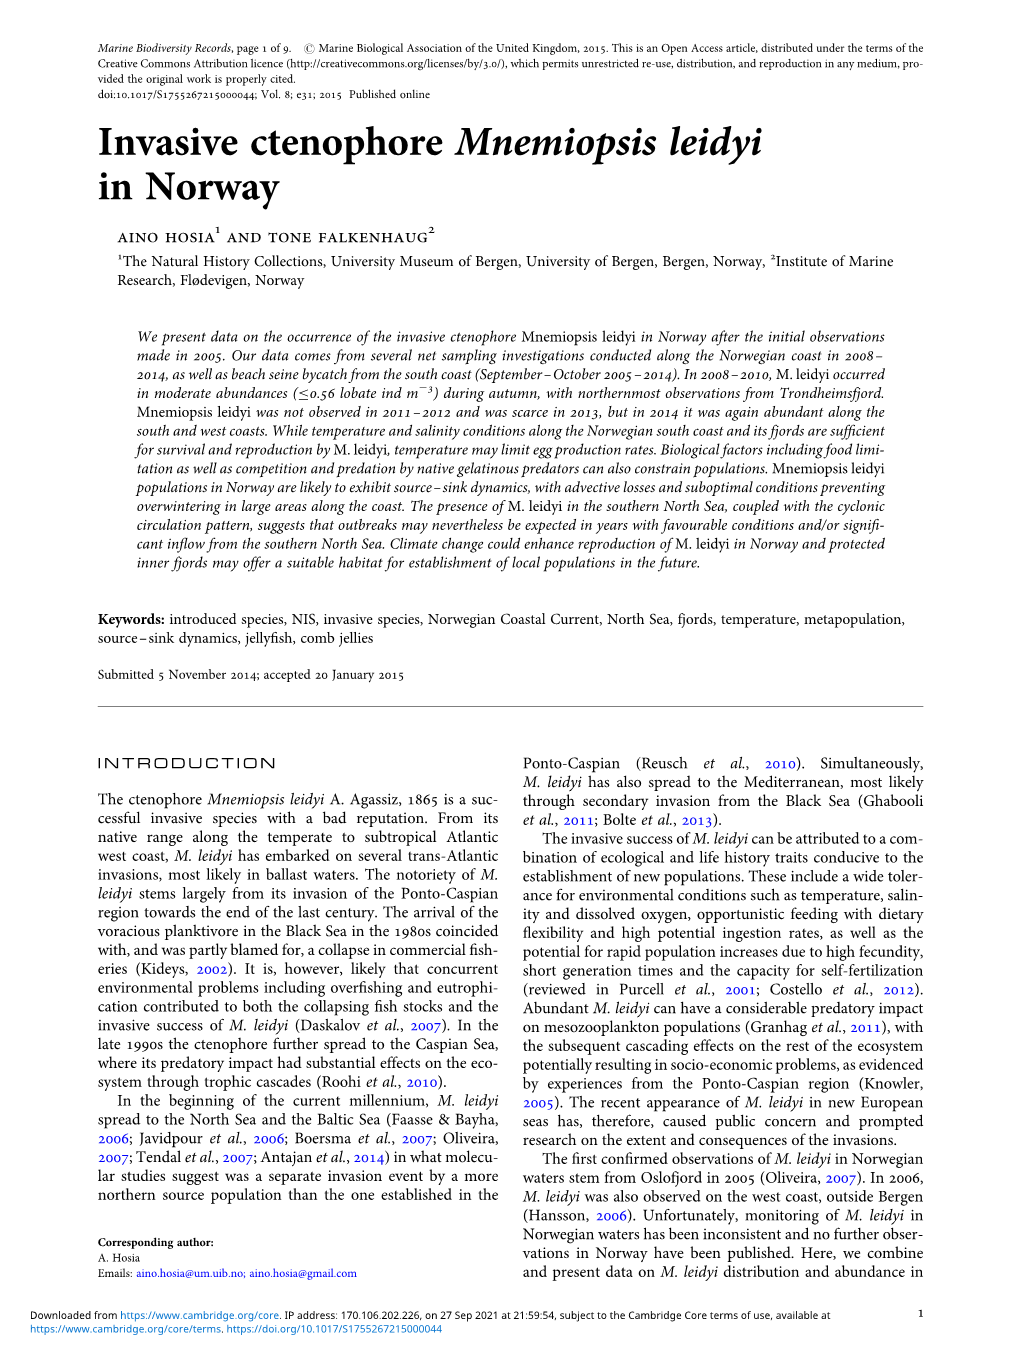 Invasive Ctenophore Mnemiopsis Leidyi in Norway